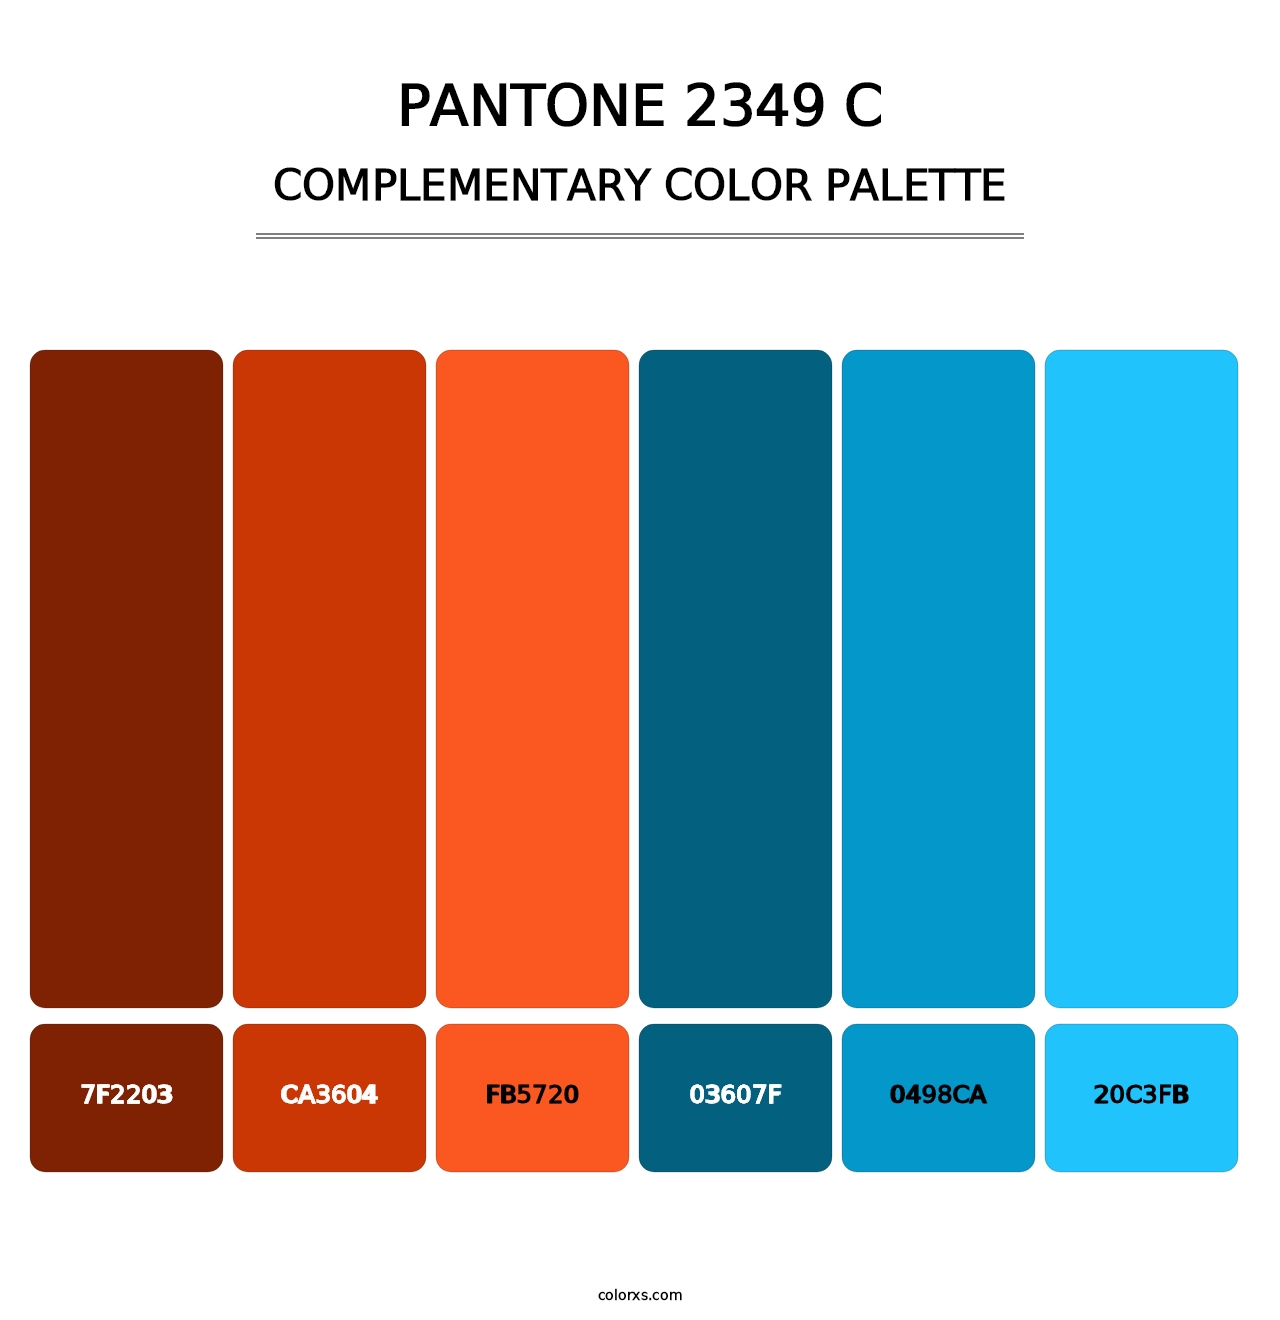 PANTONE 2349 C - Complementary Color Palette